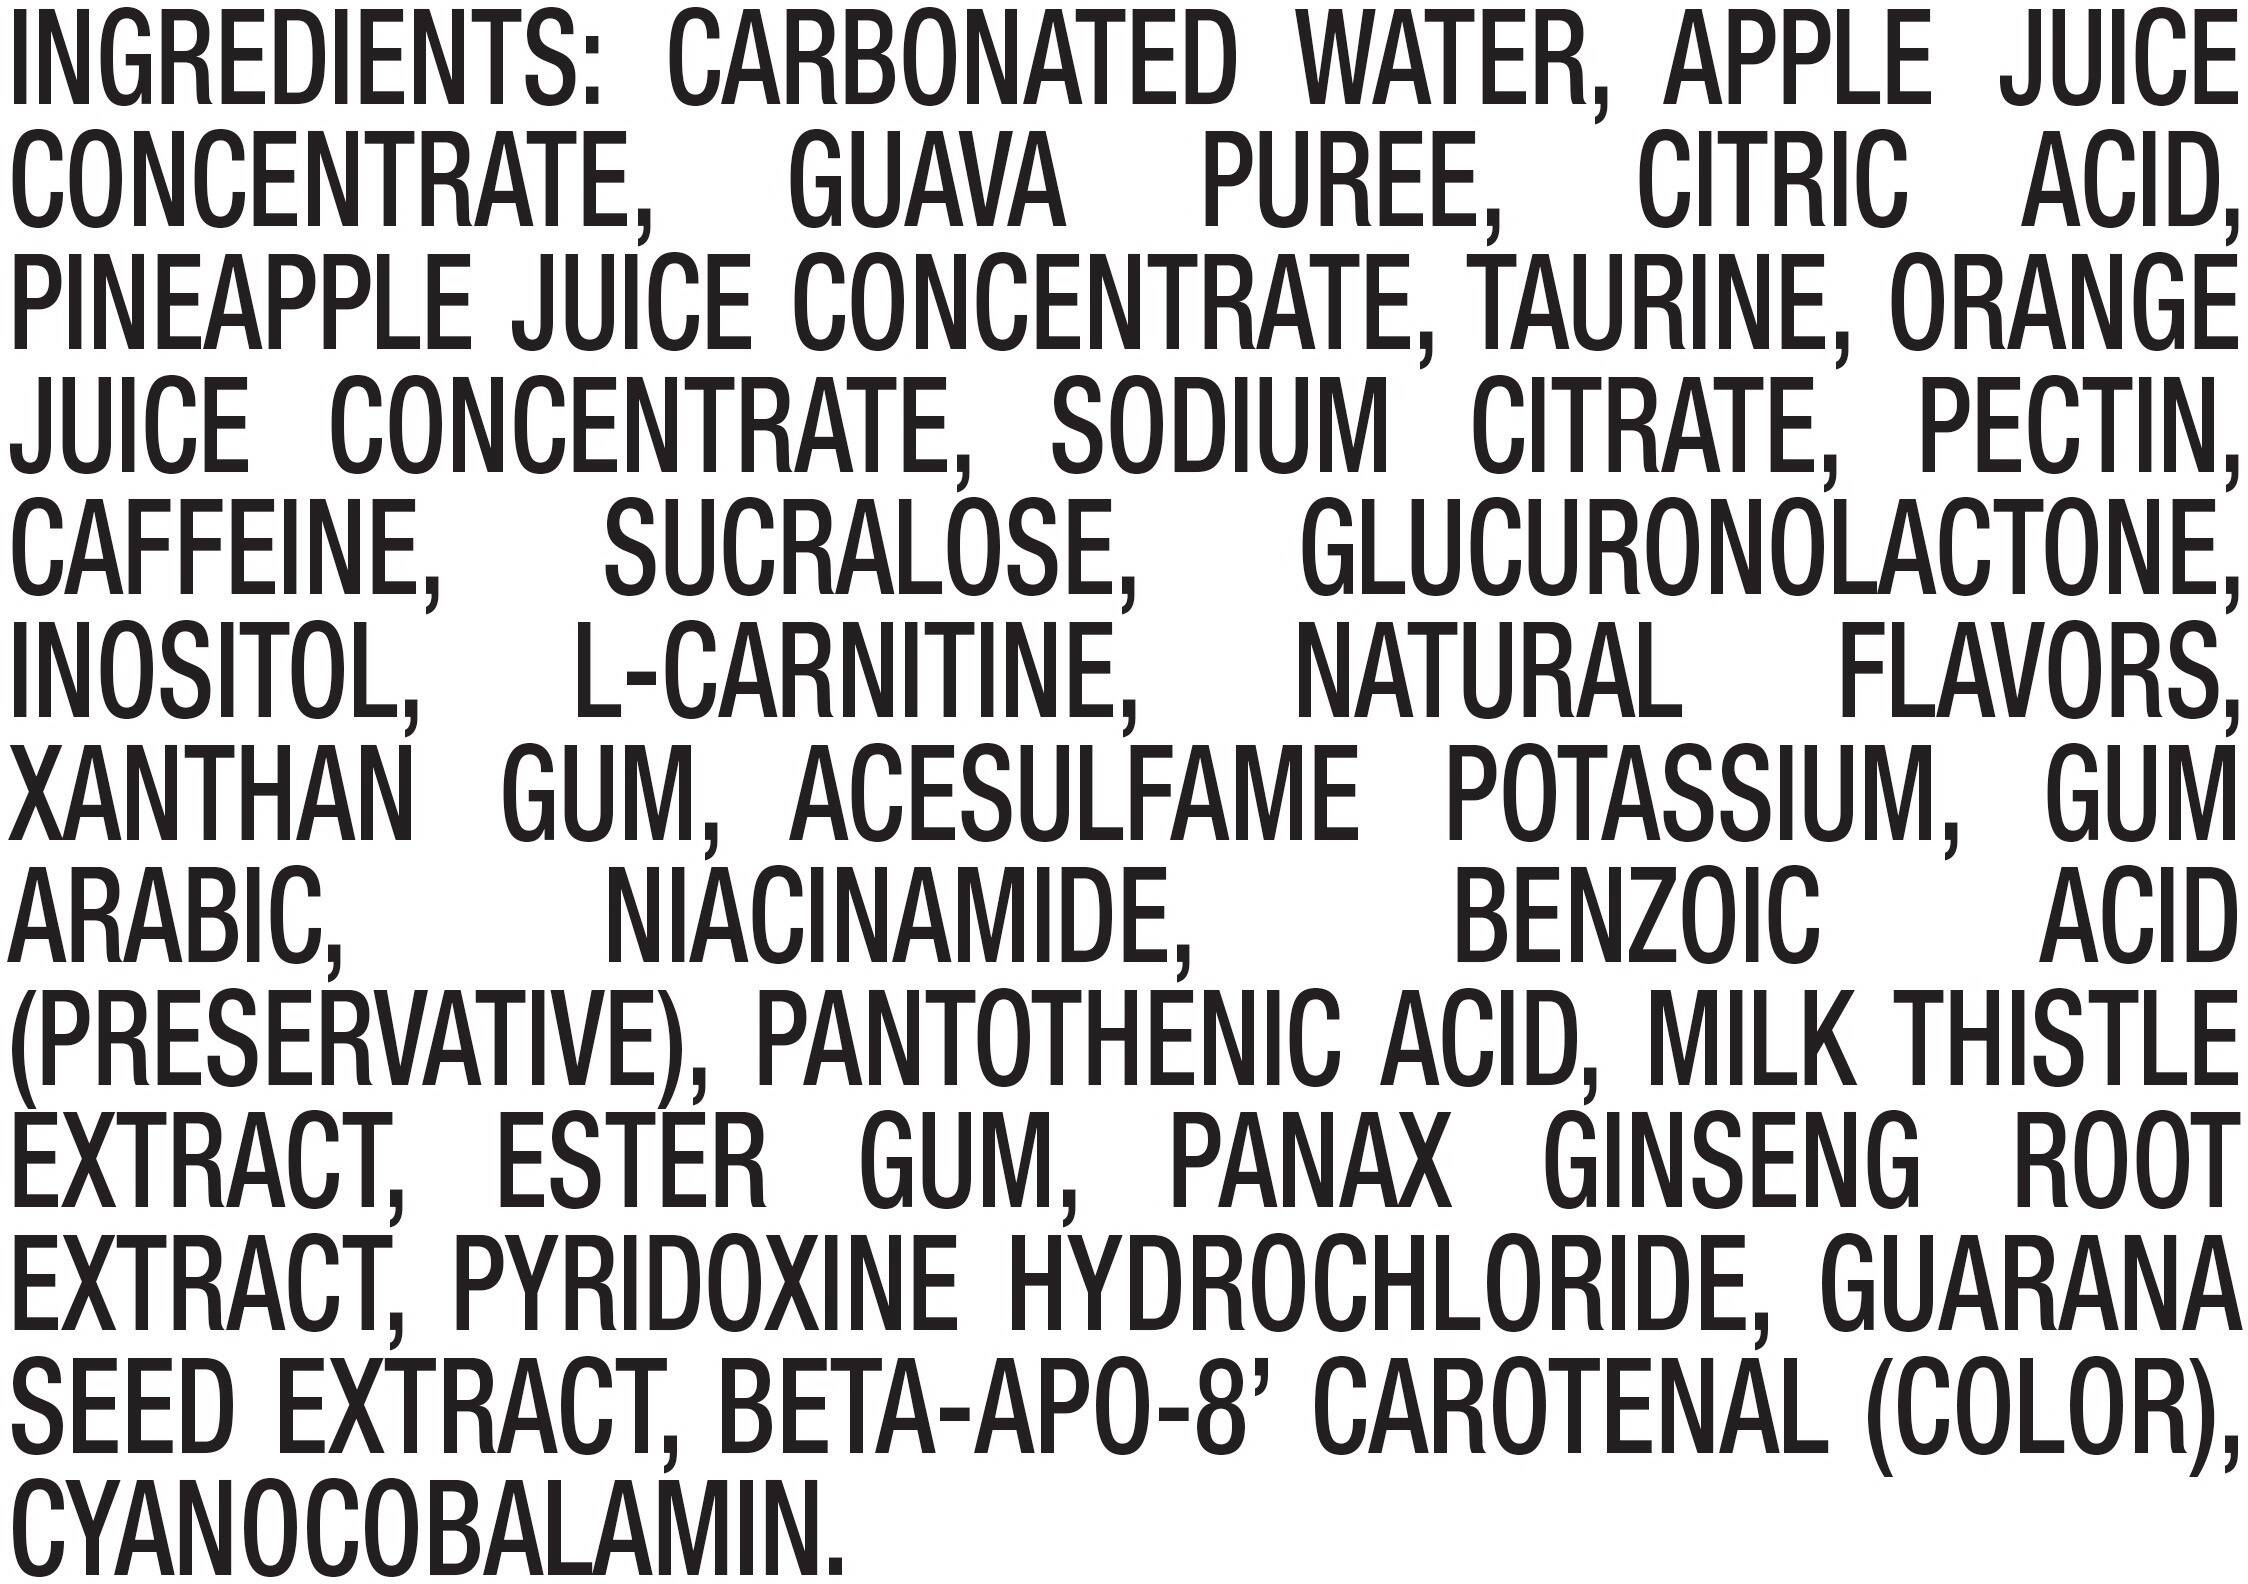 Image describing nutrition information for product Rockstar Juiced Pineaple Orange Guava